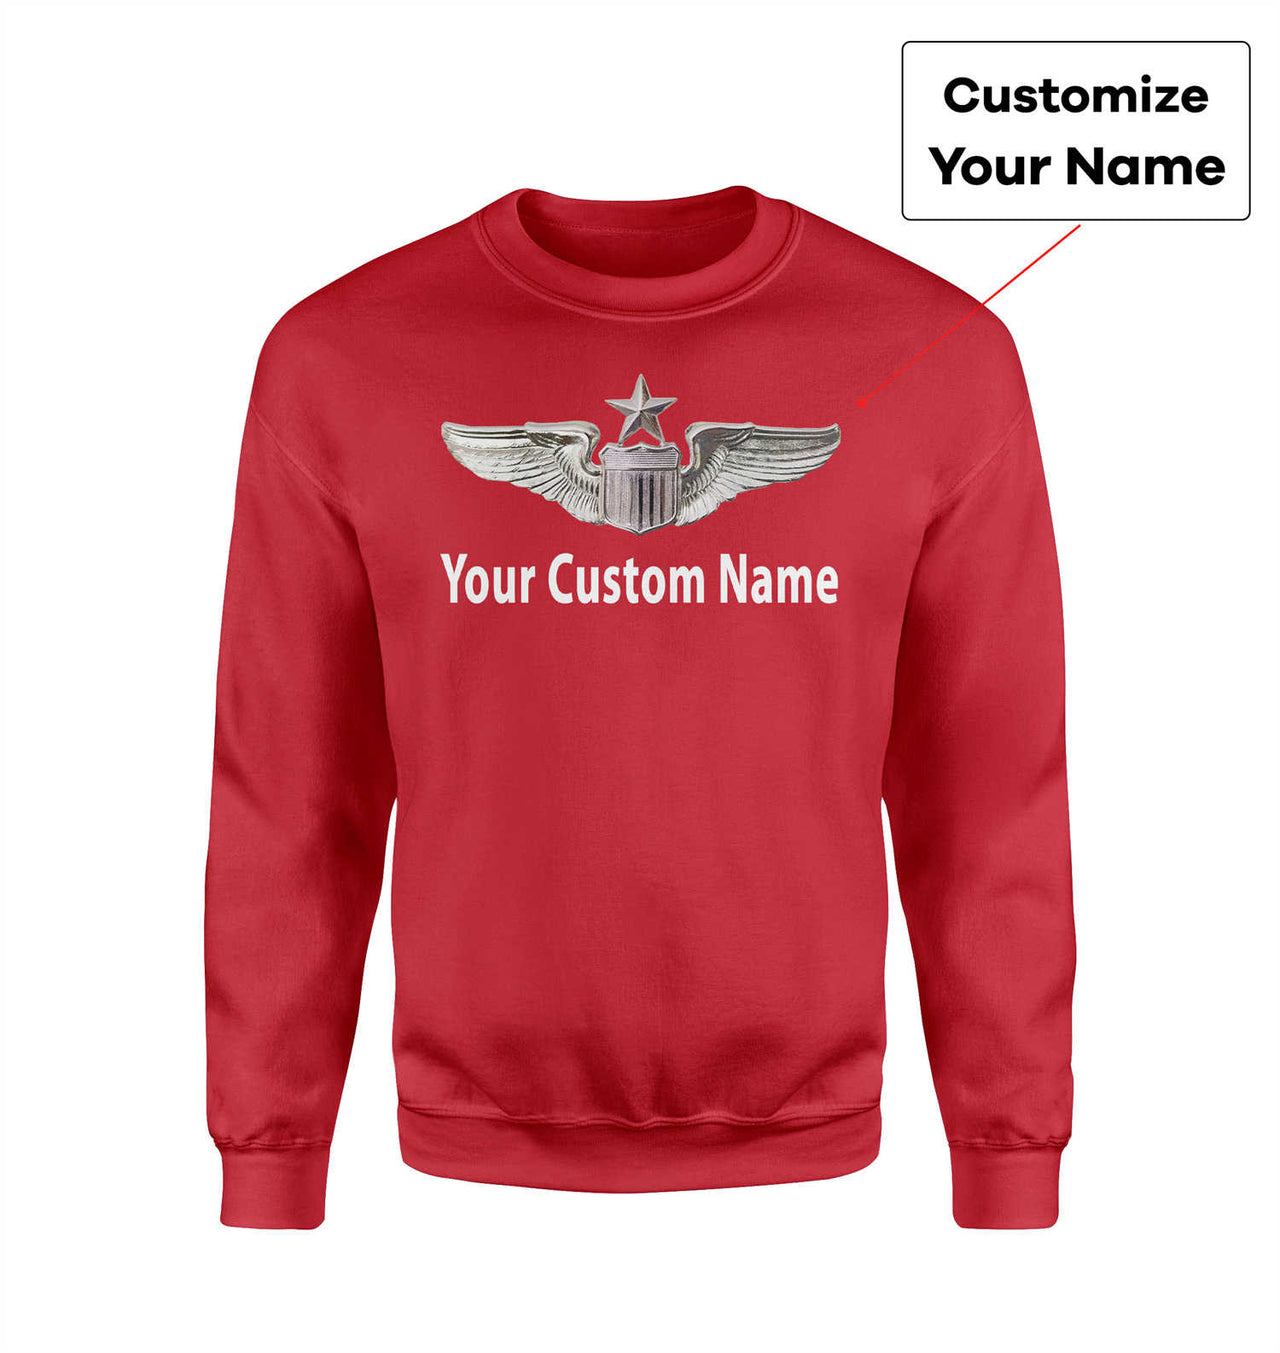 Custom Name & Big Badge (Air Force & Star) Designed 3D Sweatshirts